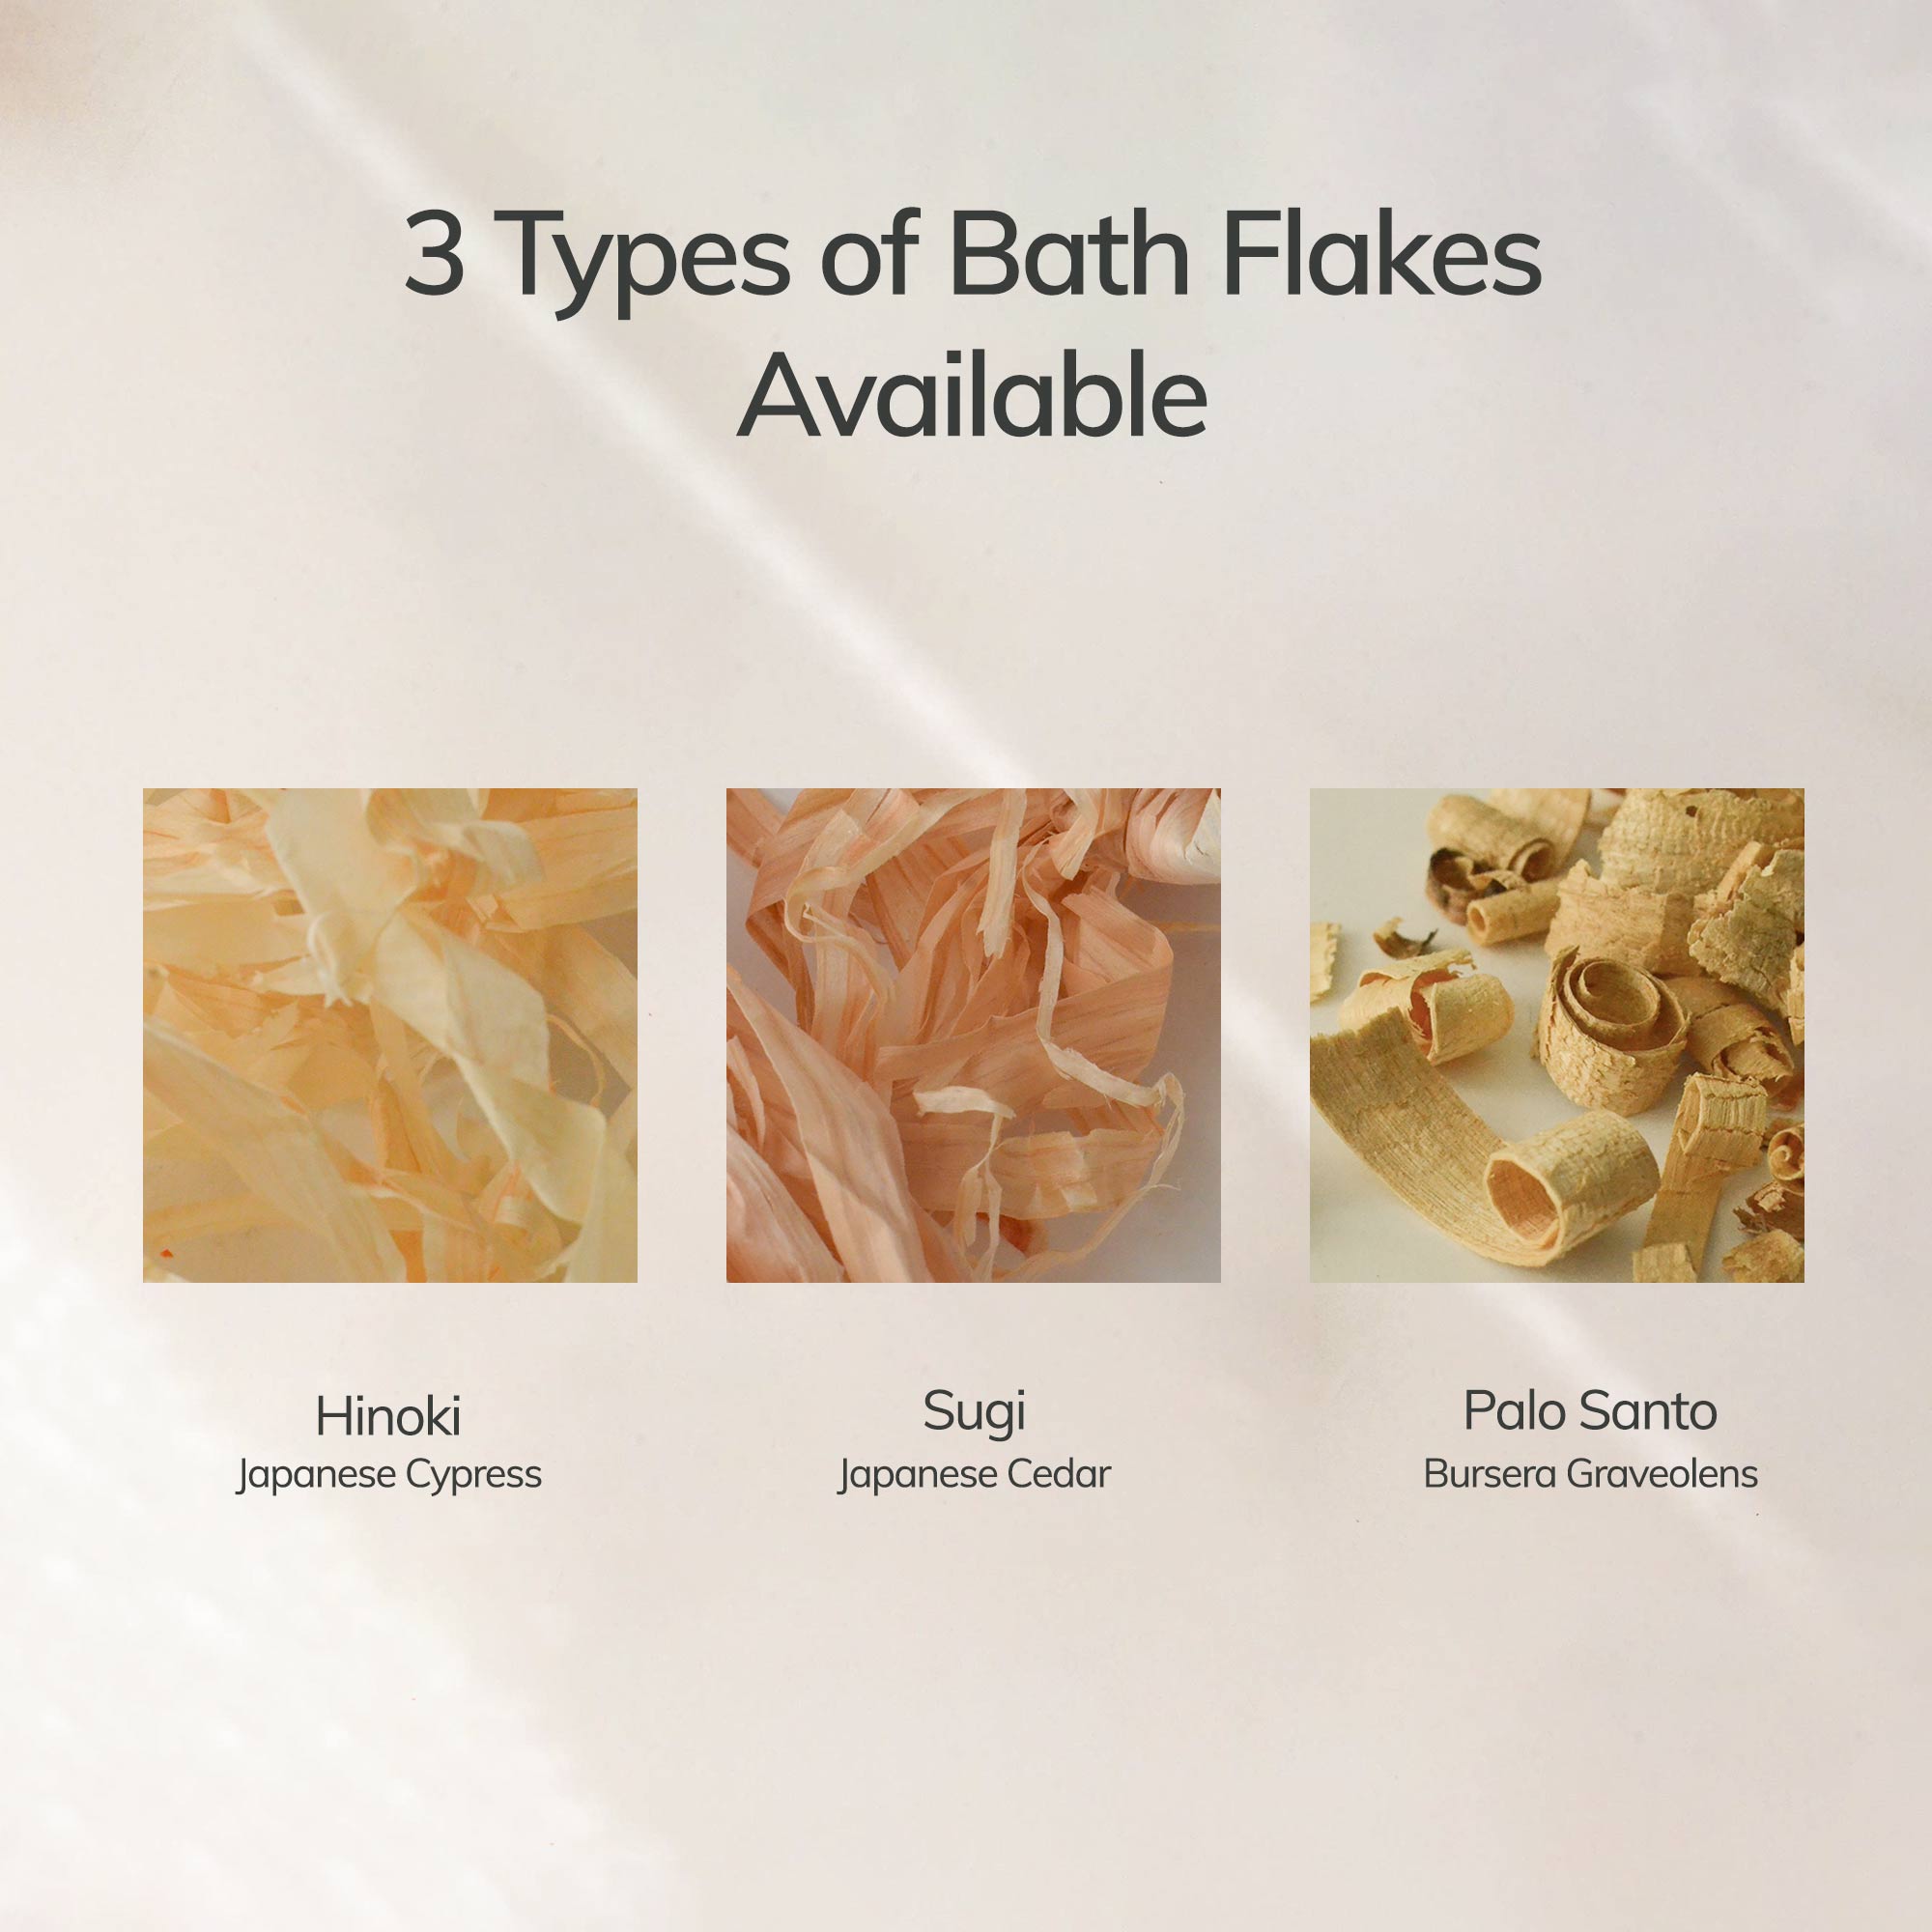 3 kinds of bath flakes available: Hinoki, Sugi, Palo Santo